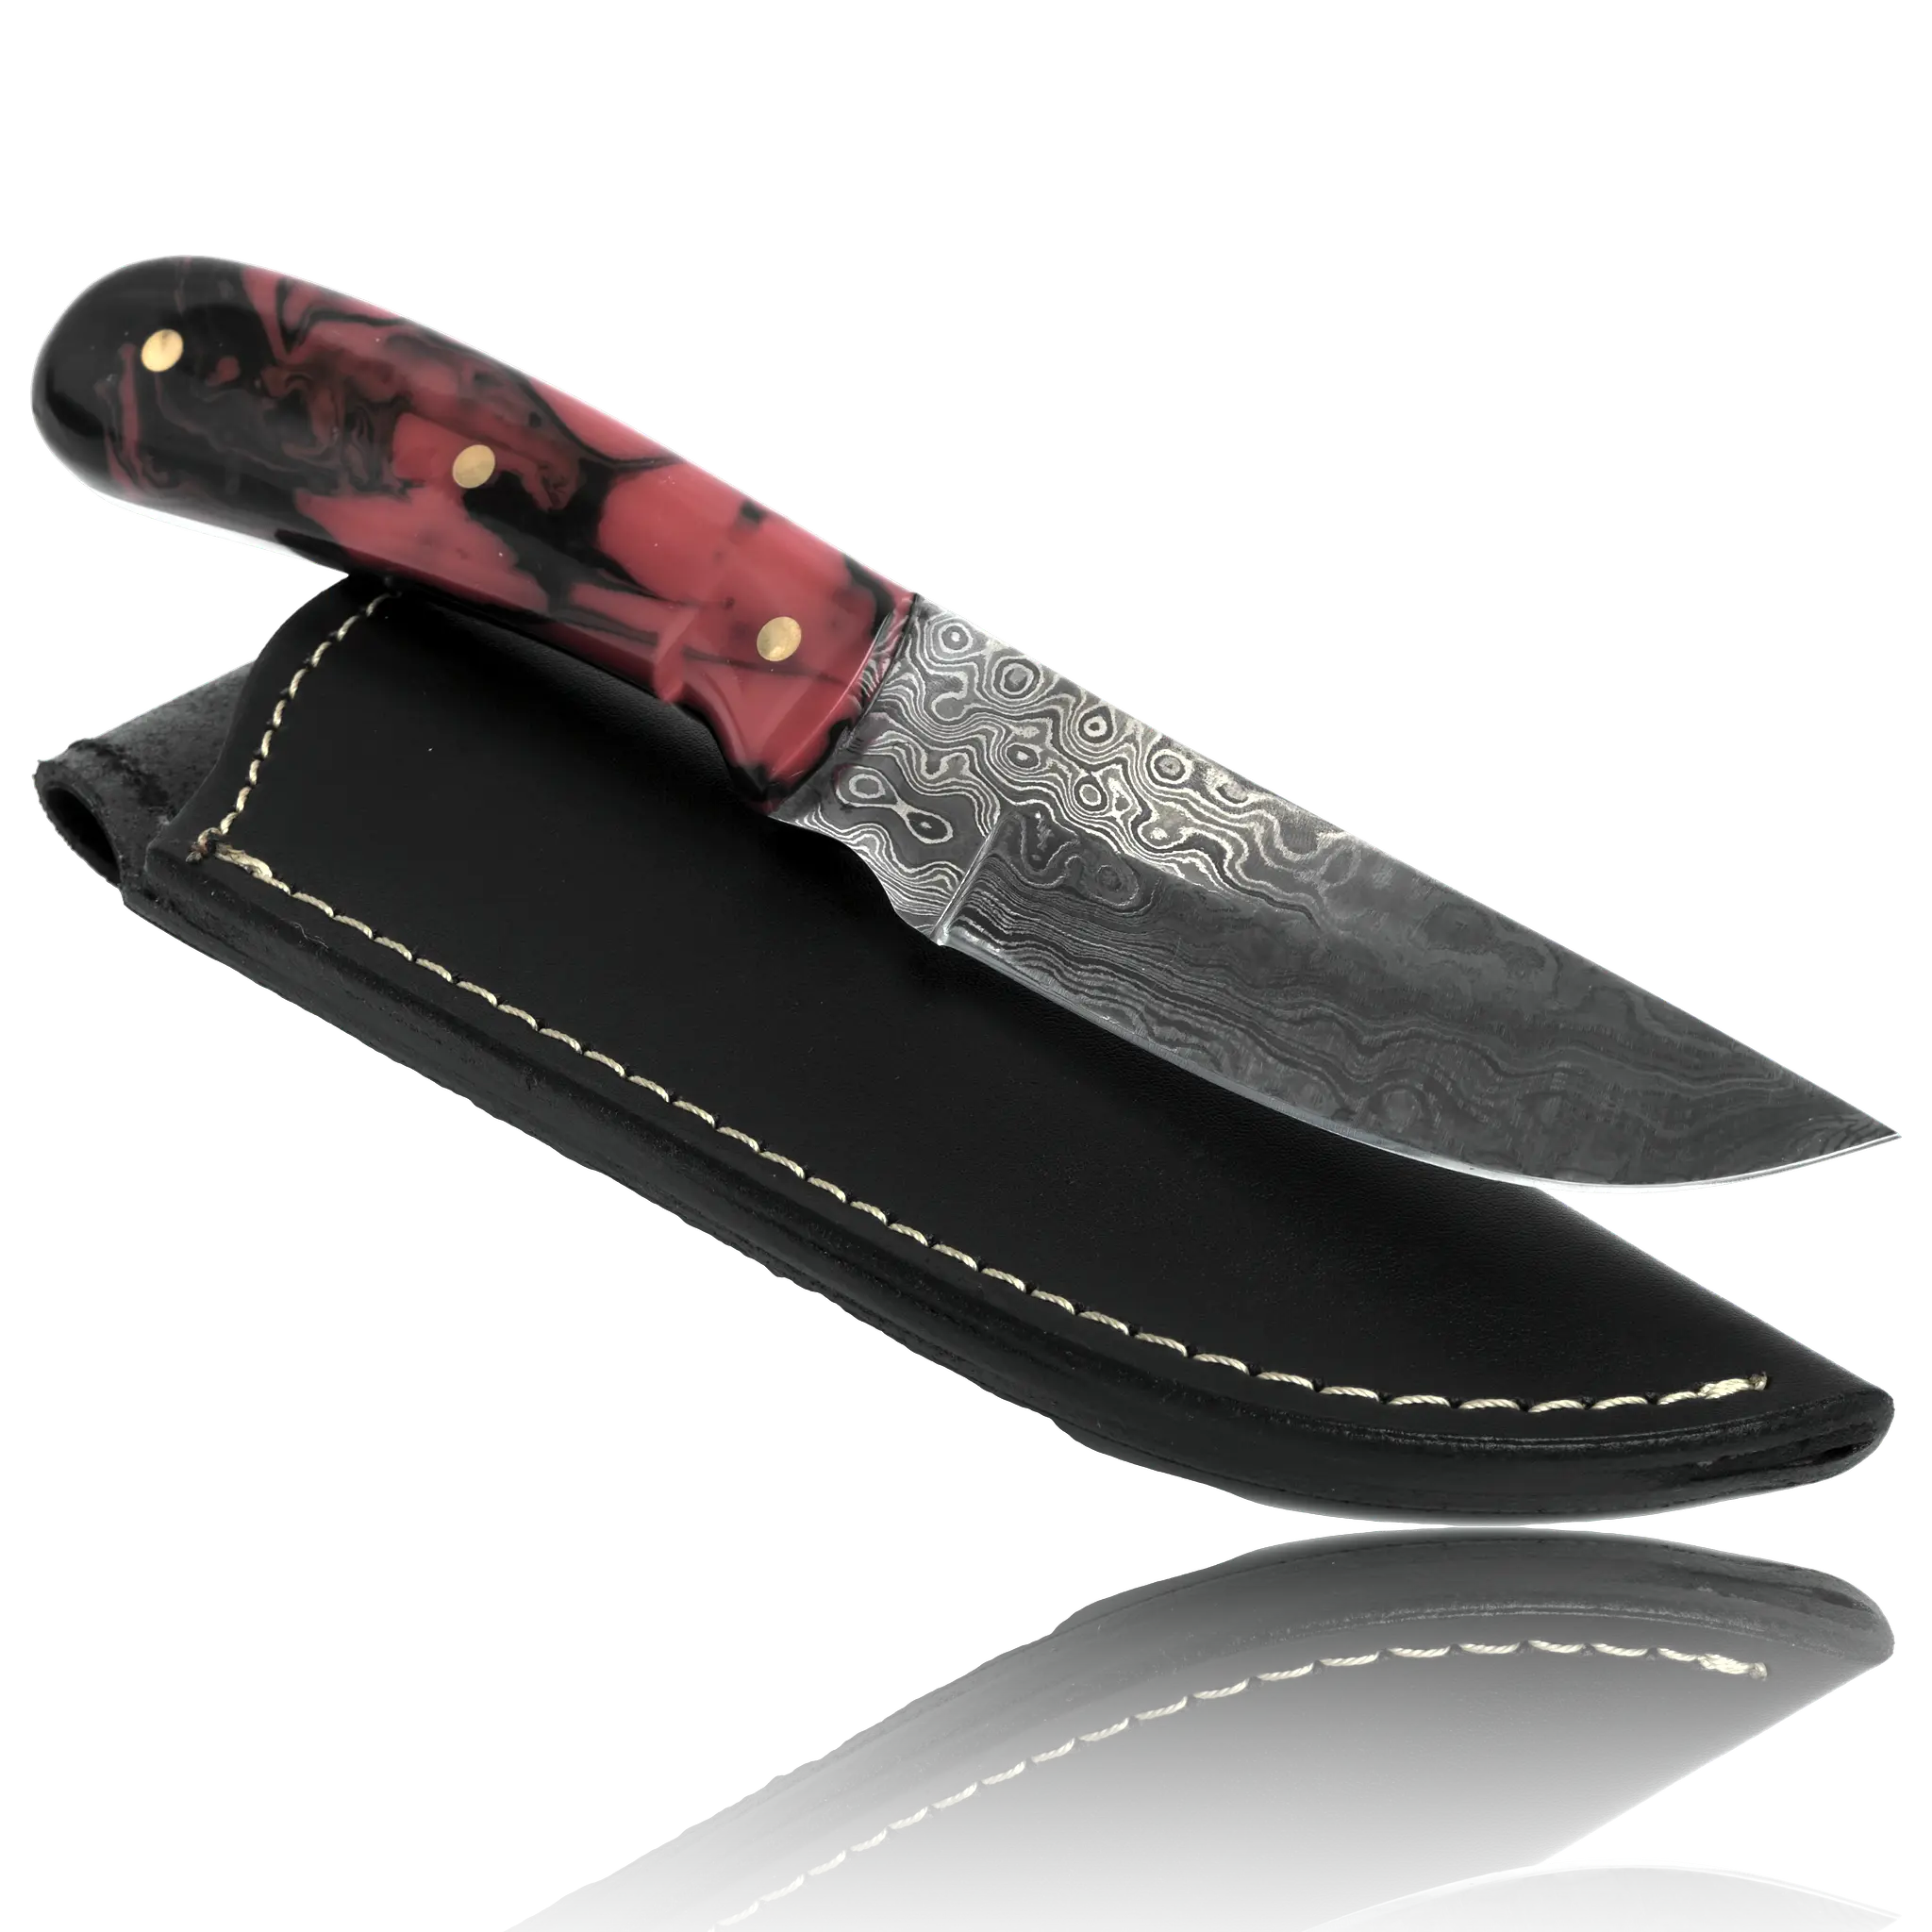 YUMA Damascus Steel Skinner Knife 9.4" avec gaine en cuir de vache d'origine